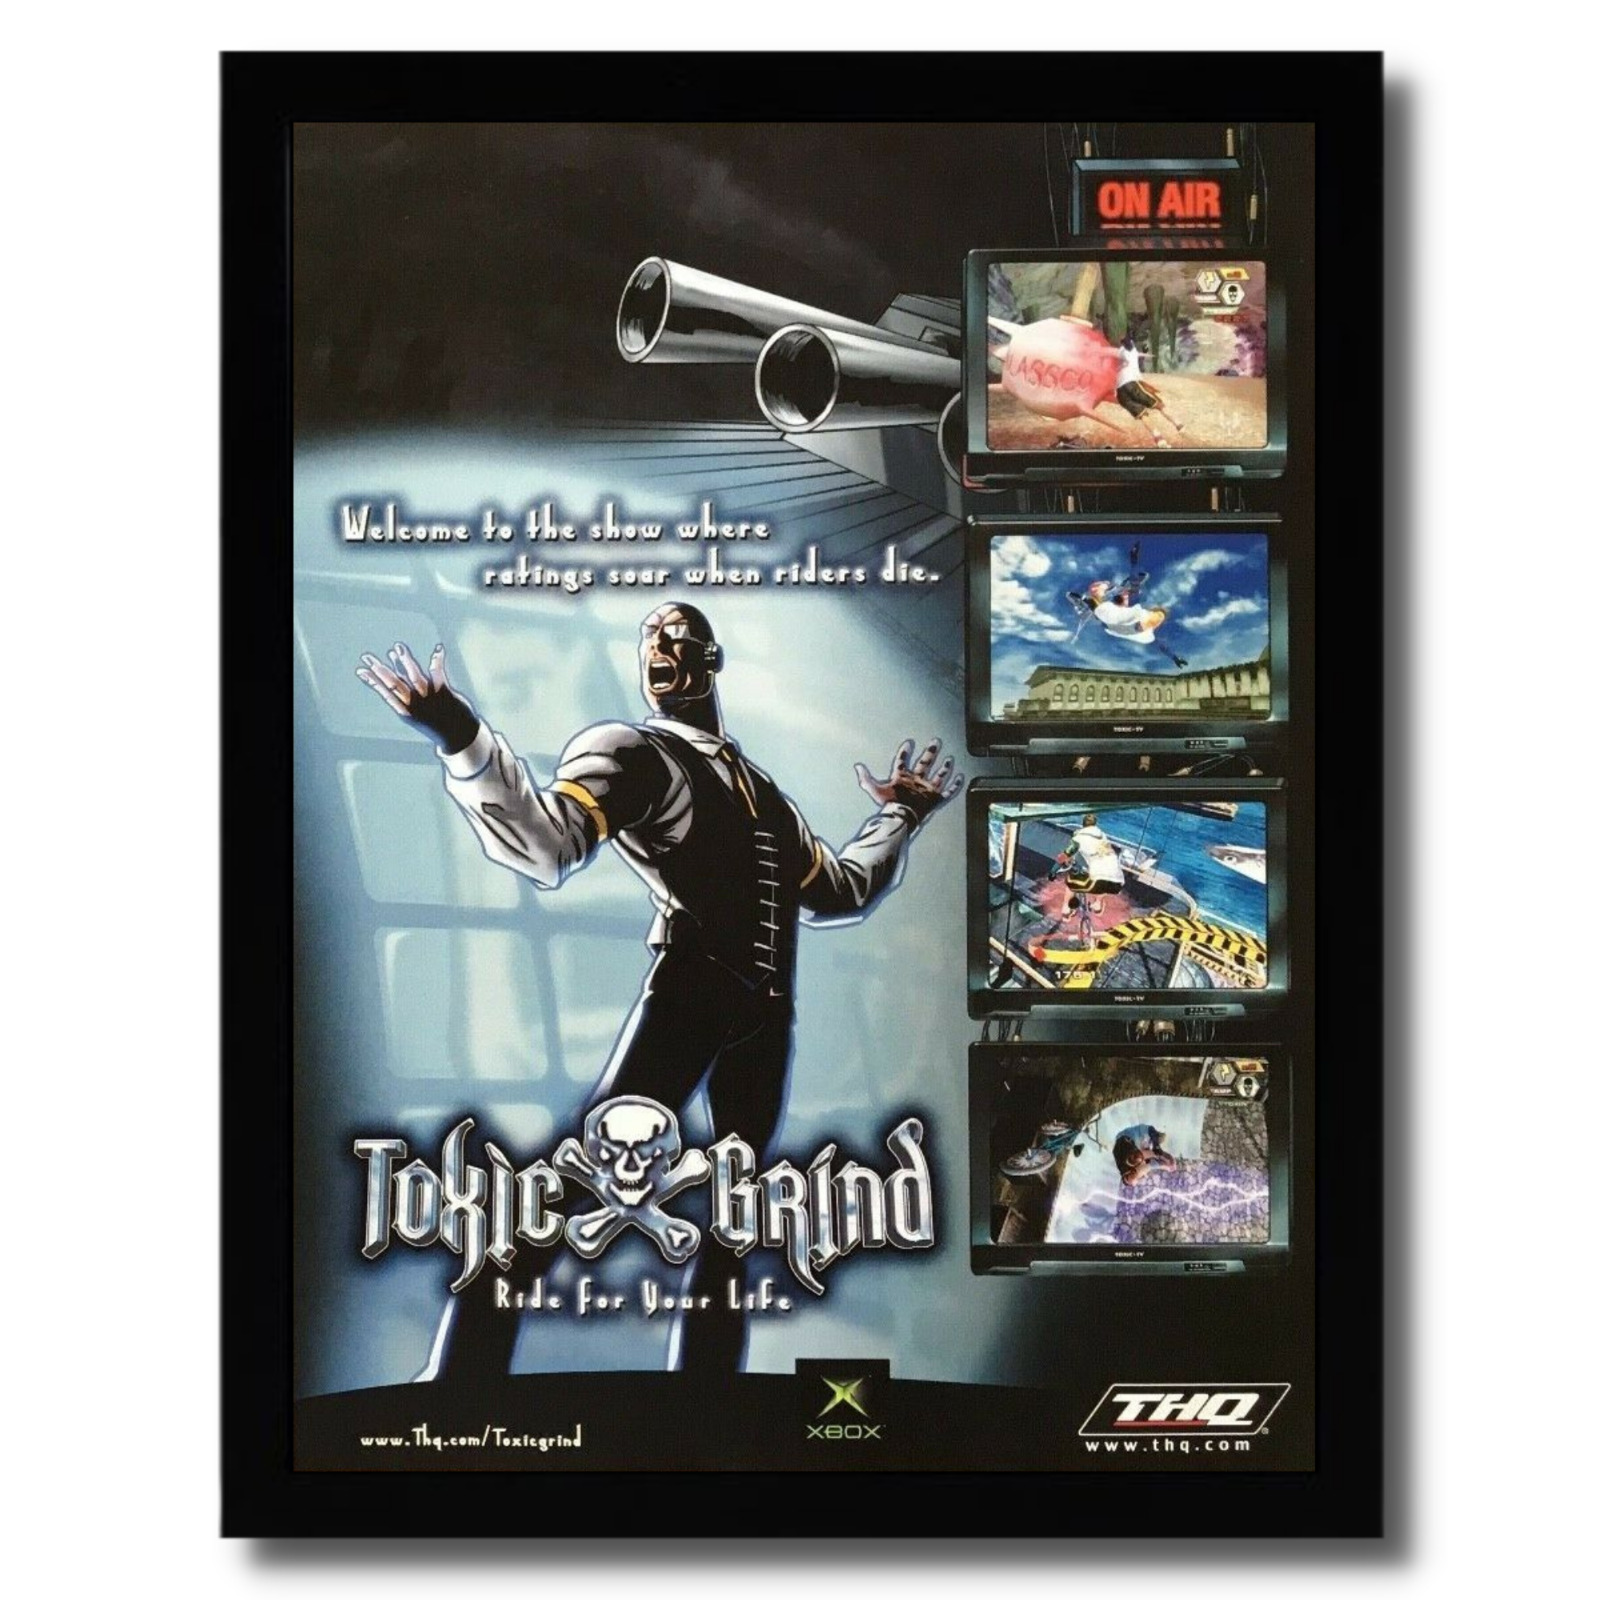 2004 Toxic Grind Framed Print Ad/Poster Genuine Original Xbox Video Game Art